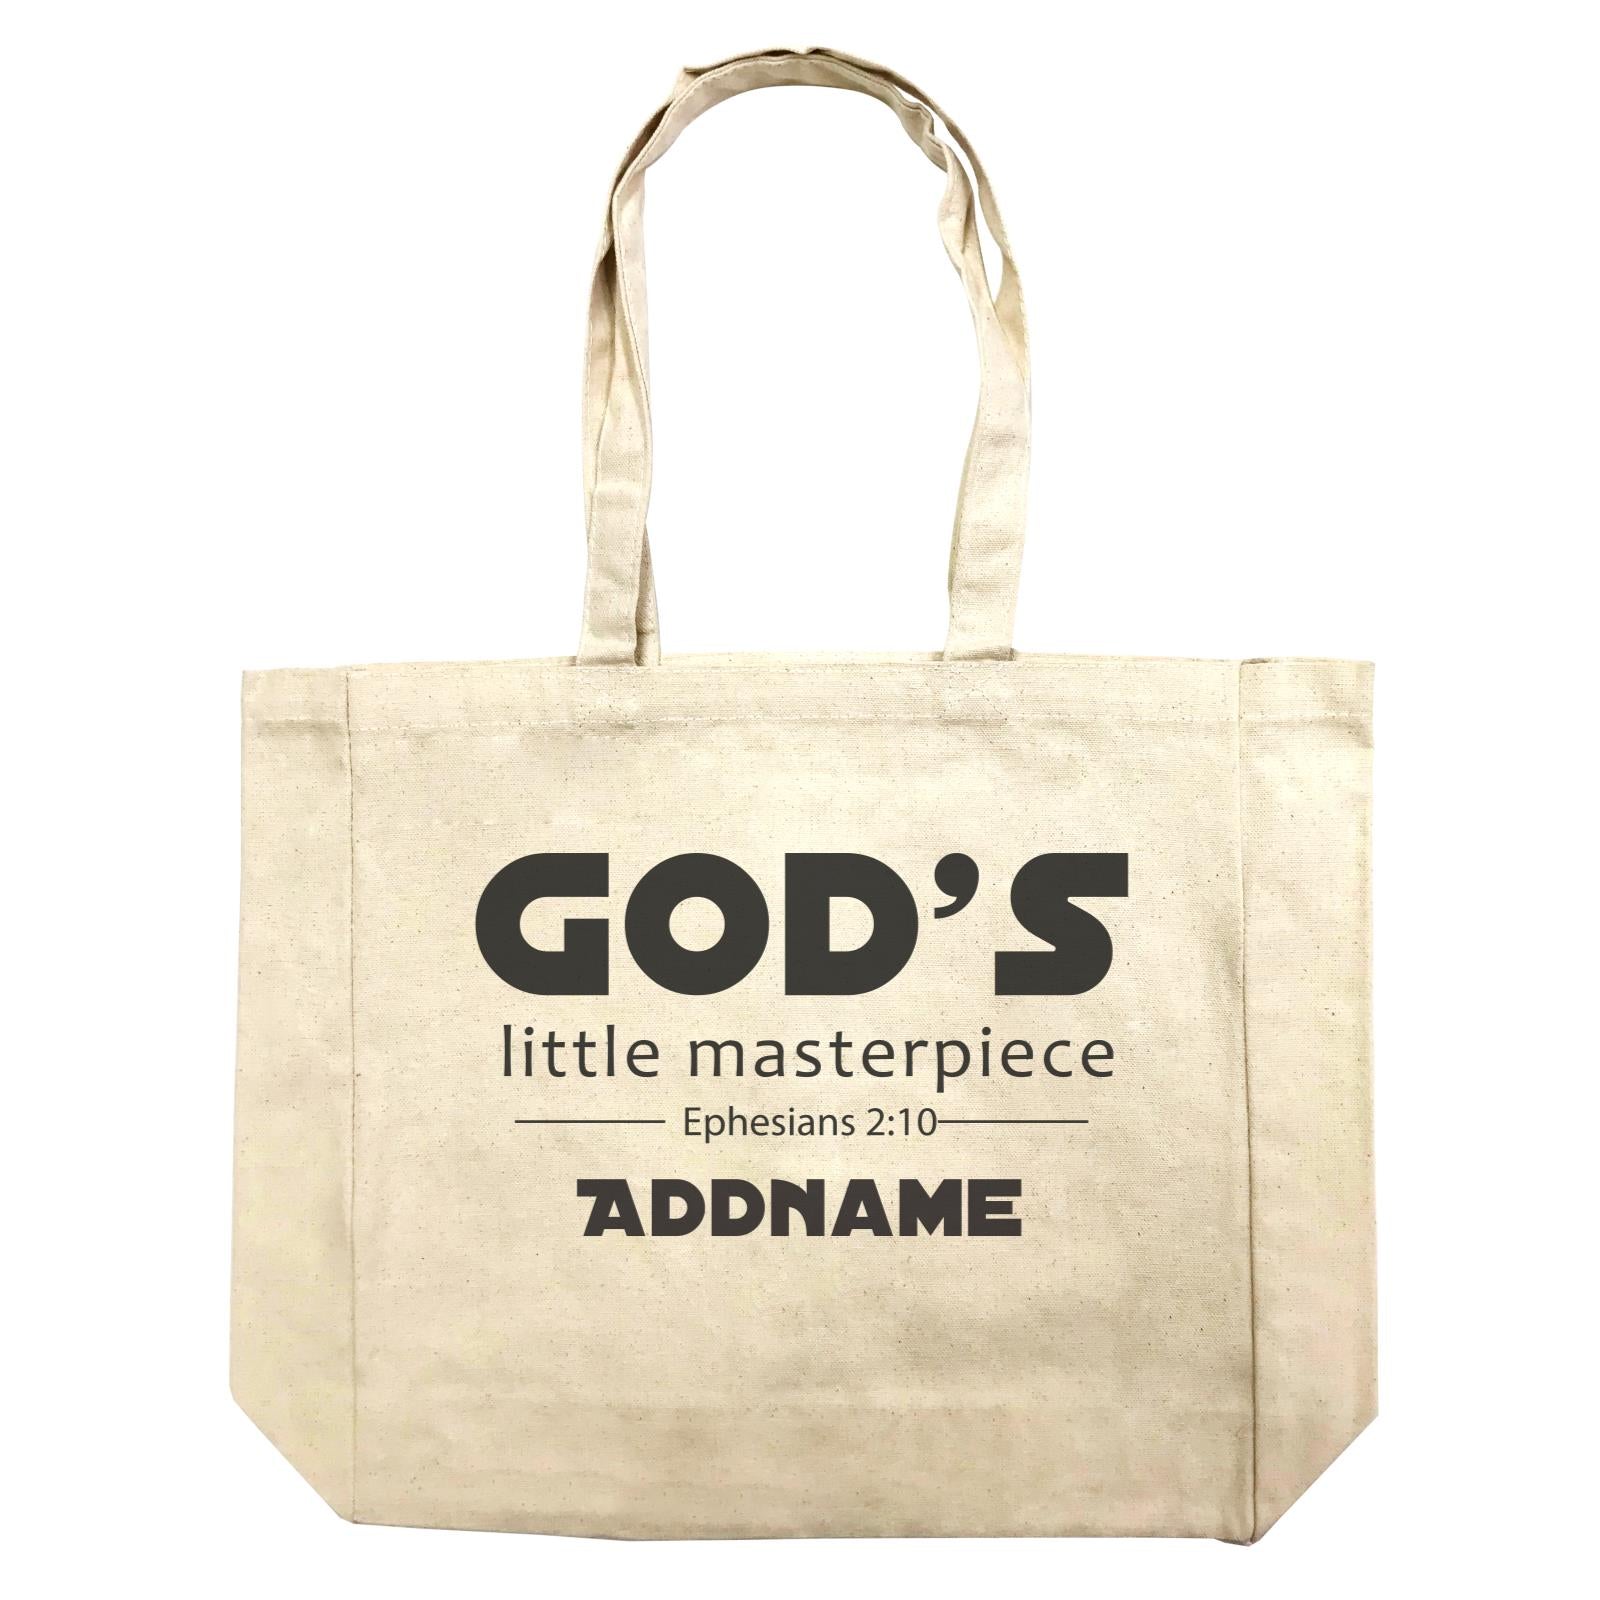 Christian Baby God's Little Masterpiece Ephesians 2.10 Addname Shopping Bag